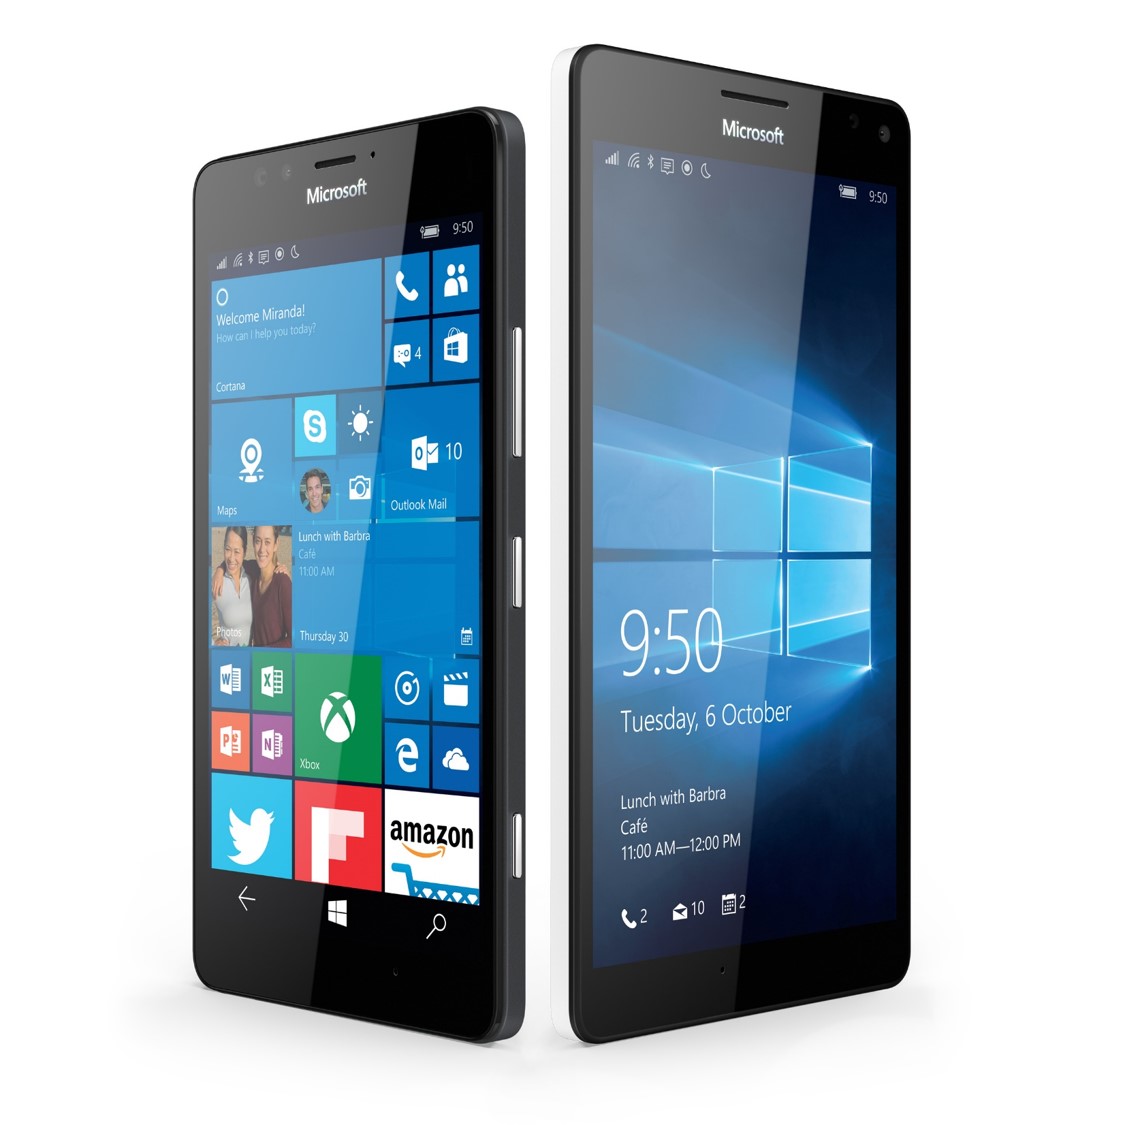 Новинки компании Microsoft - смартфоны Lumia 950 и Lumia 950 XL